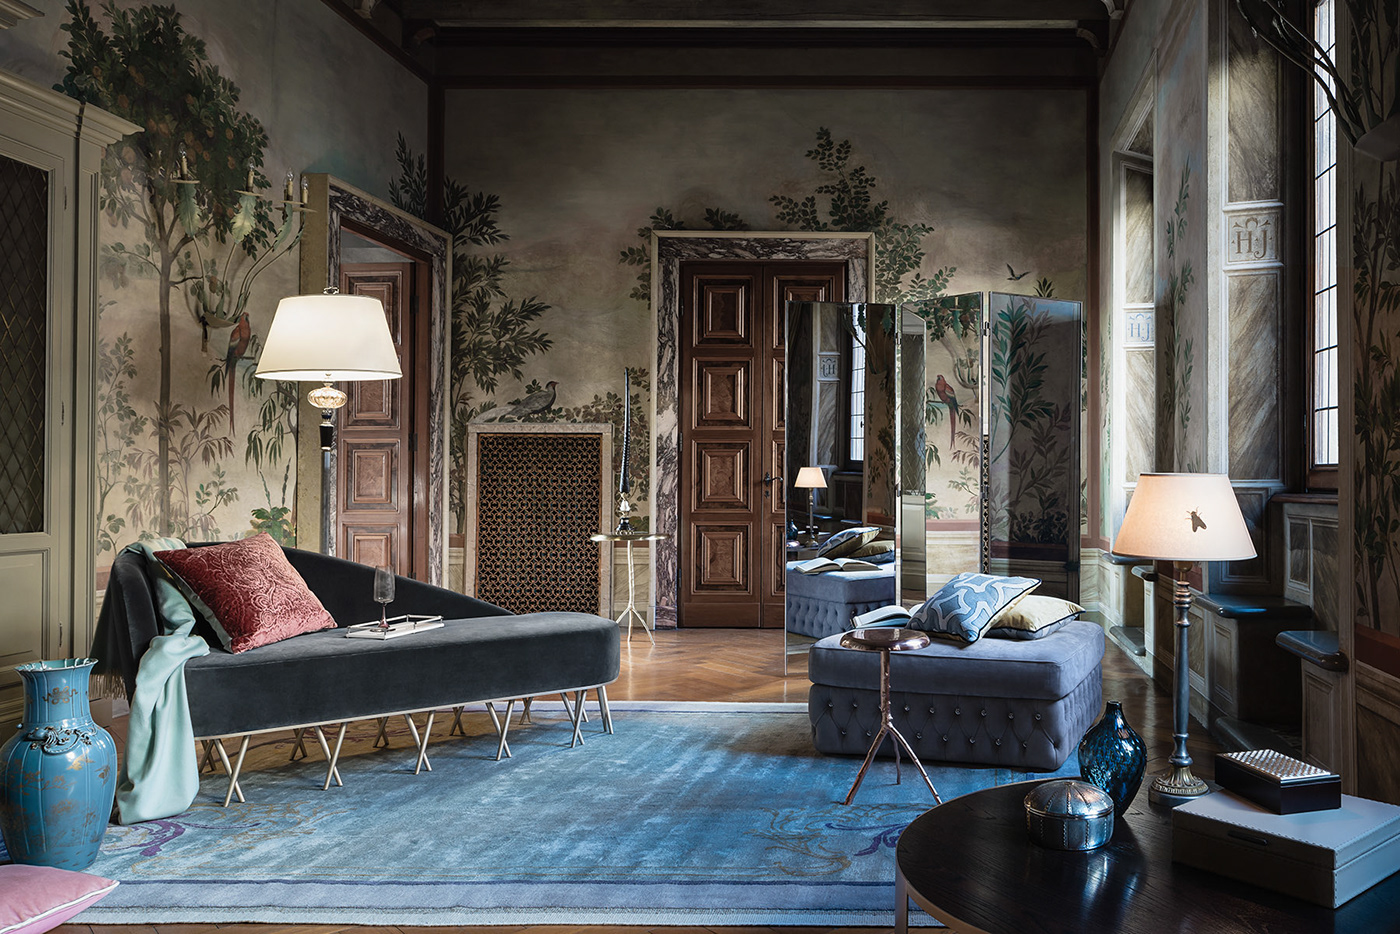 Atellani milan elegance history Sforza luxury design Interior